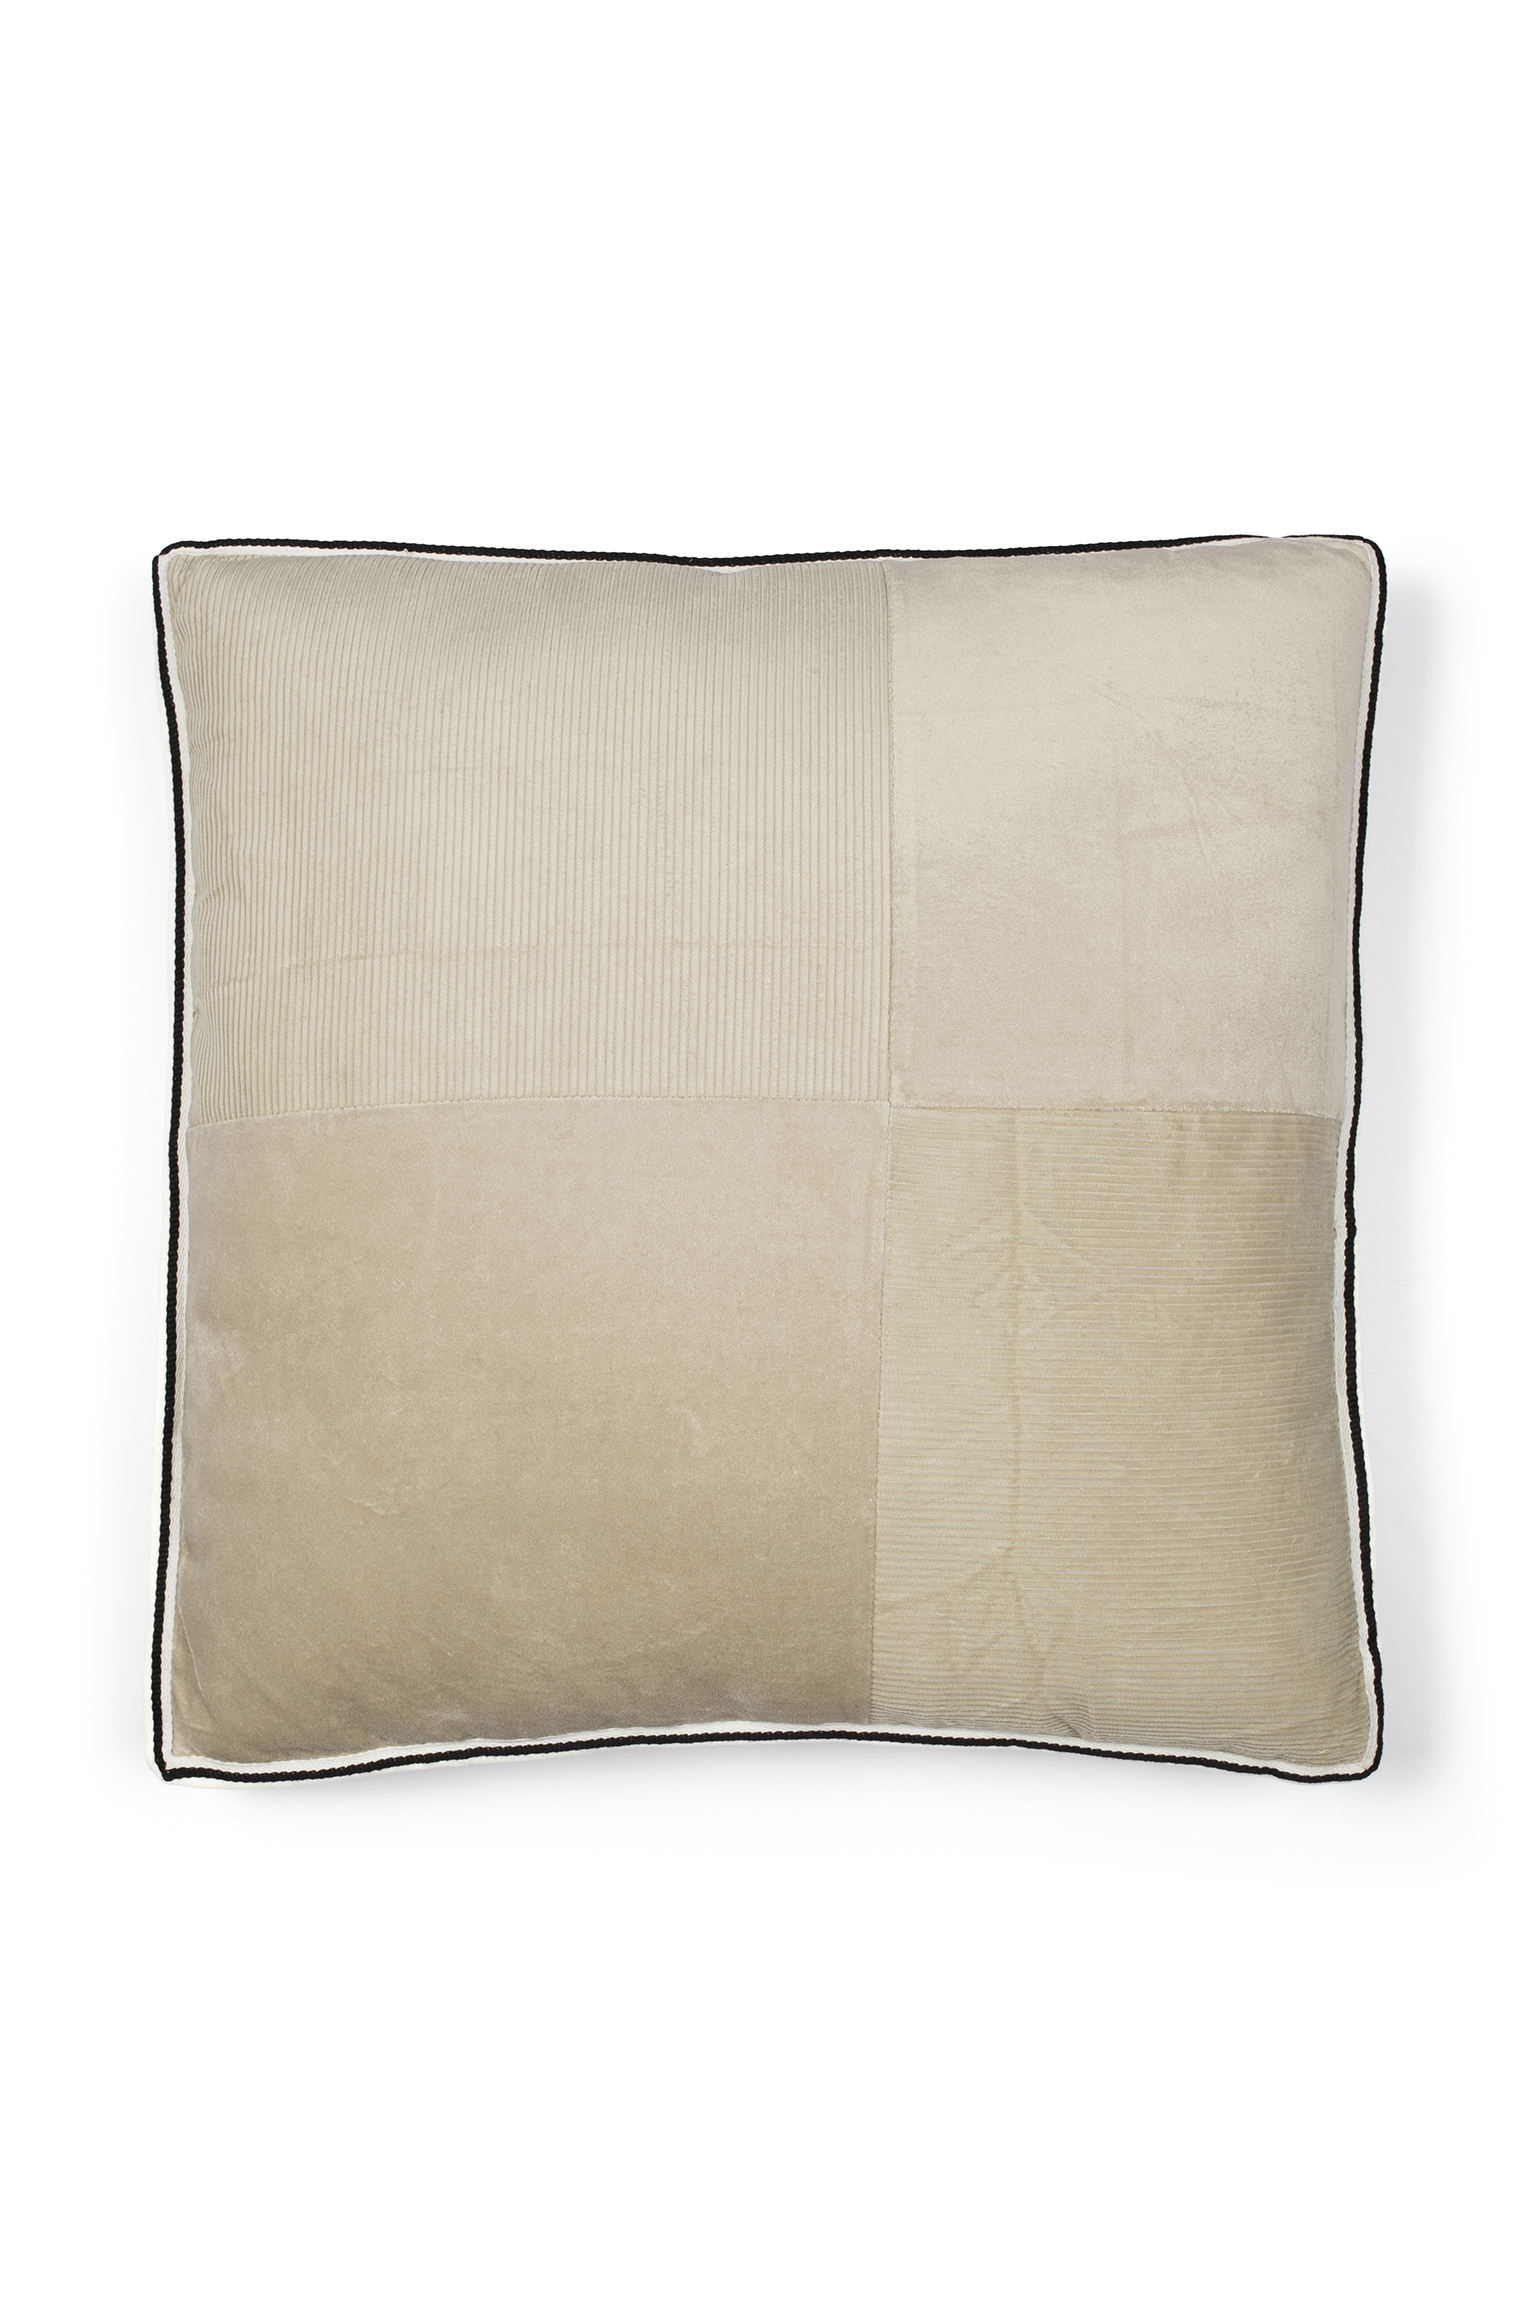 Markslöjd ARNA – Cushion 50x50cm